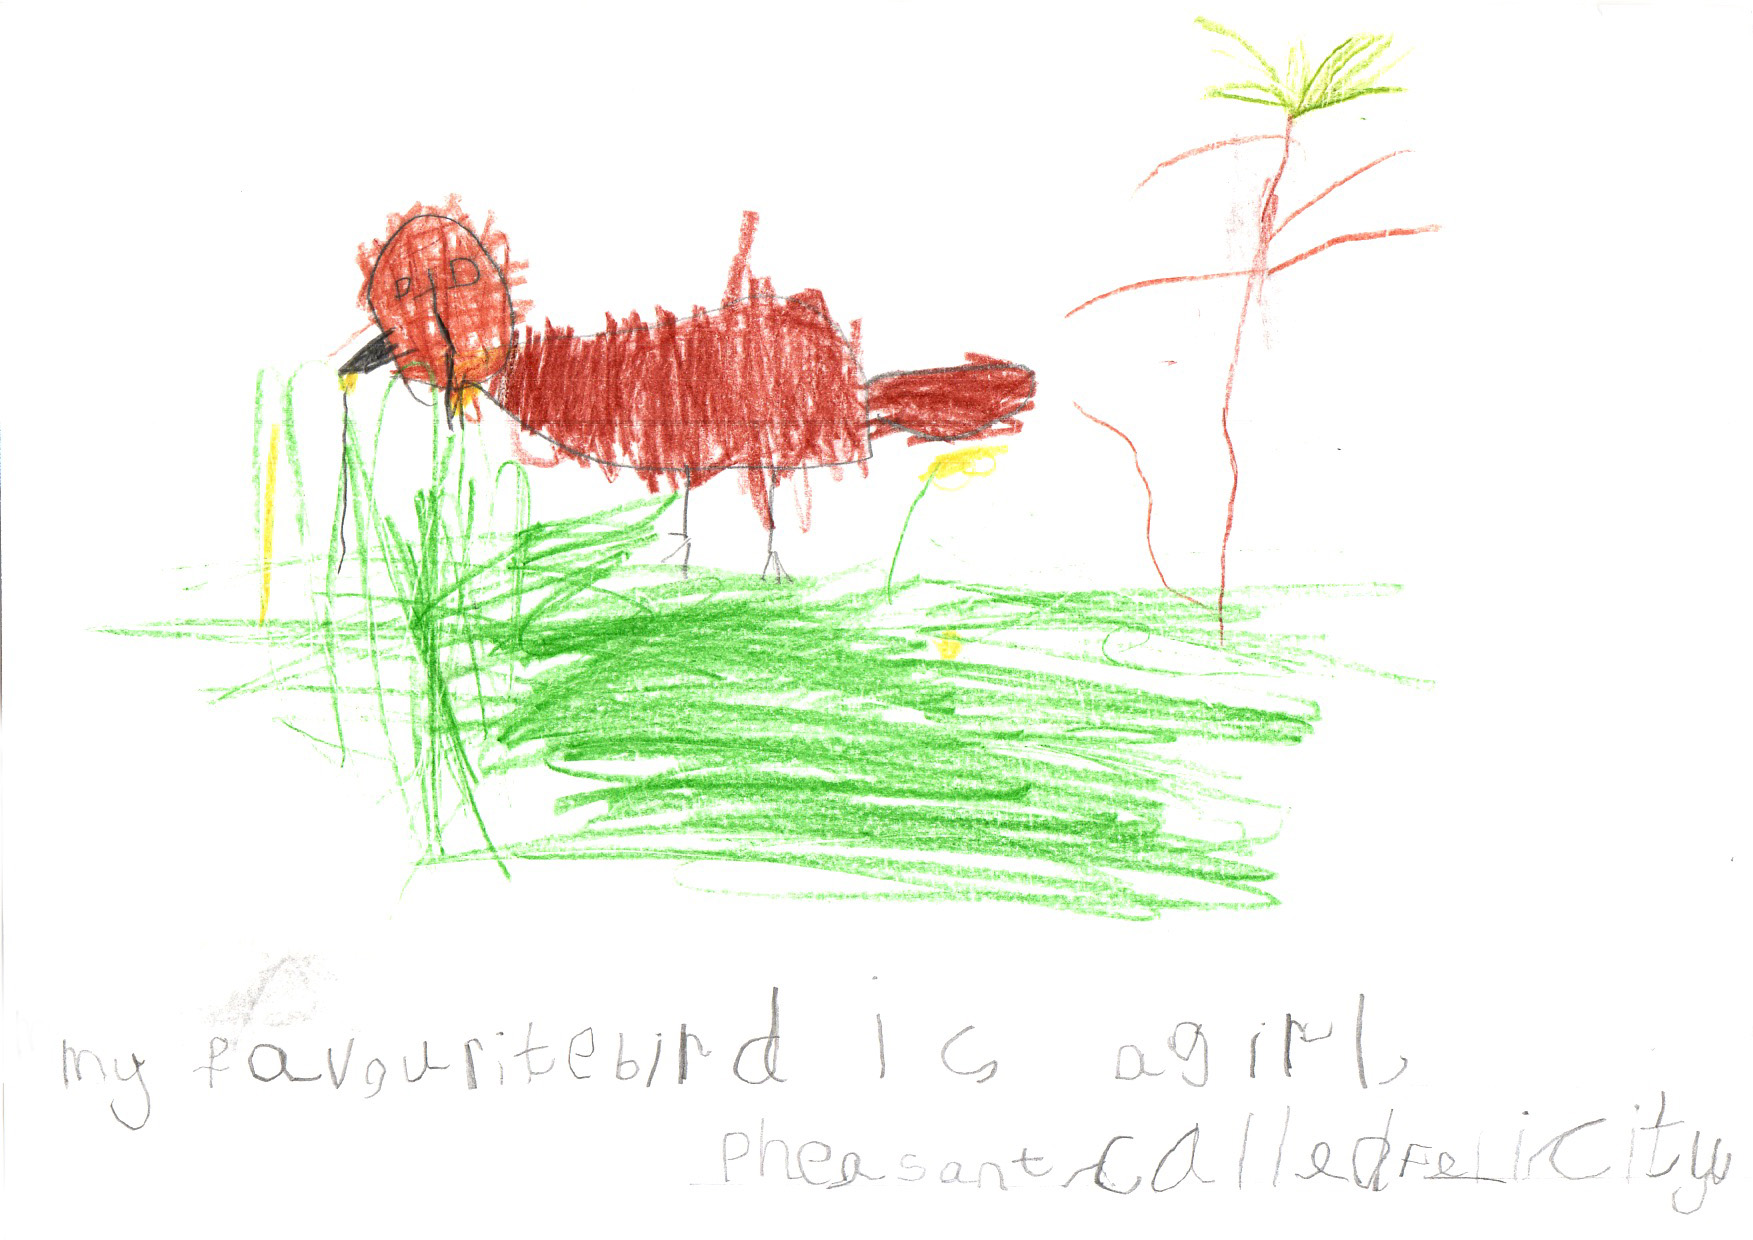 Above: "Felicity Pheasant" by Thomas Dubbeldam (Reception, Rushen Primary School)